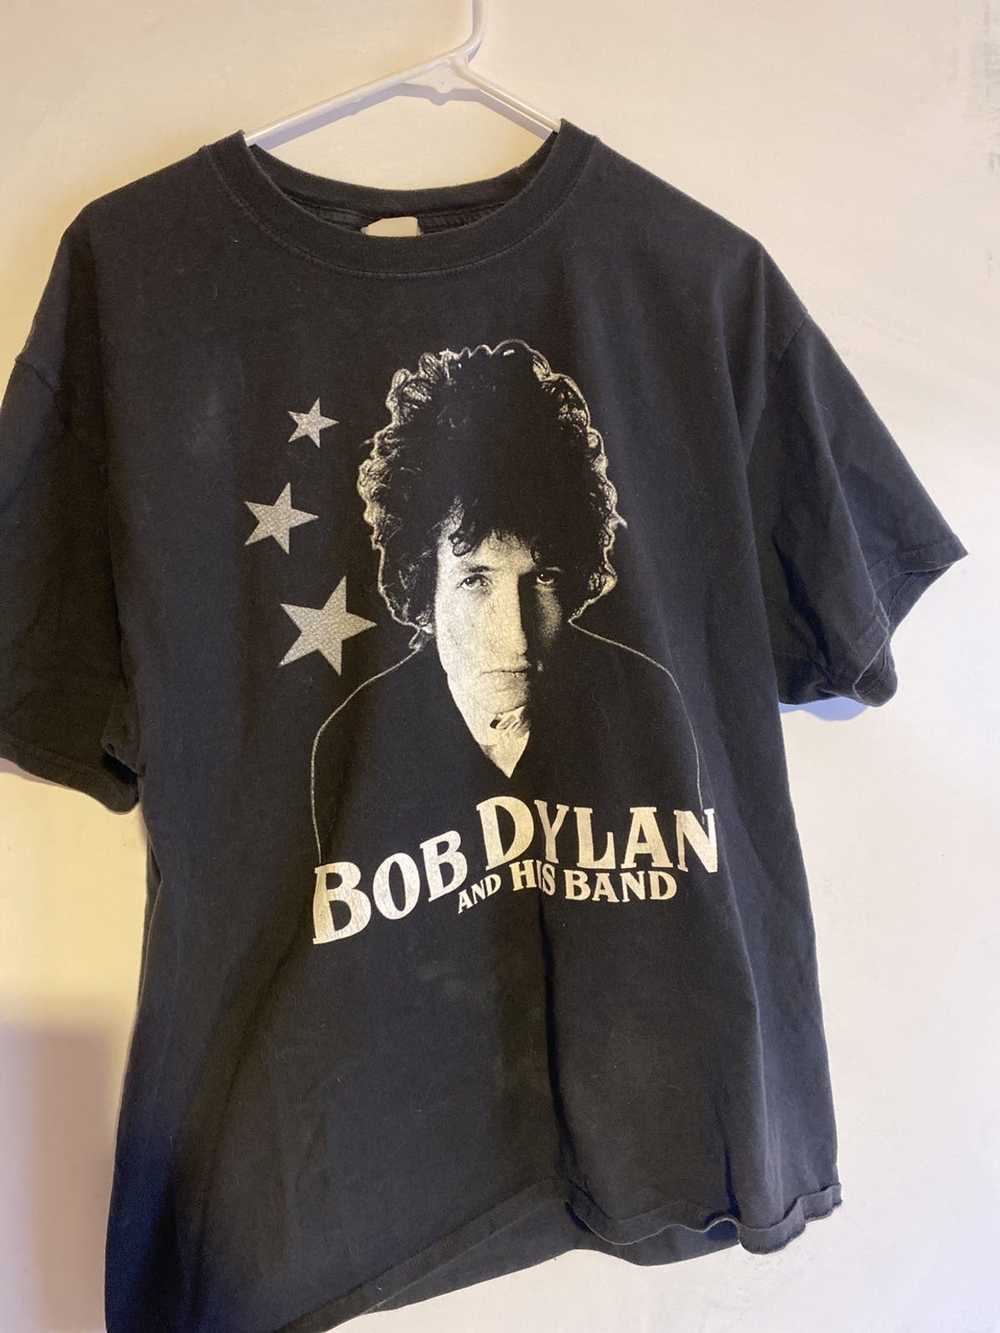 Vintage Bob Dylan 2014 tee - image 1